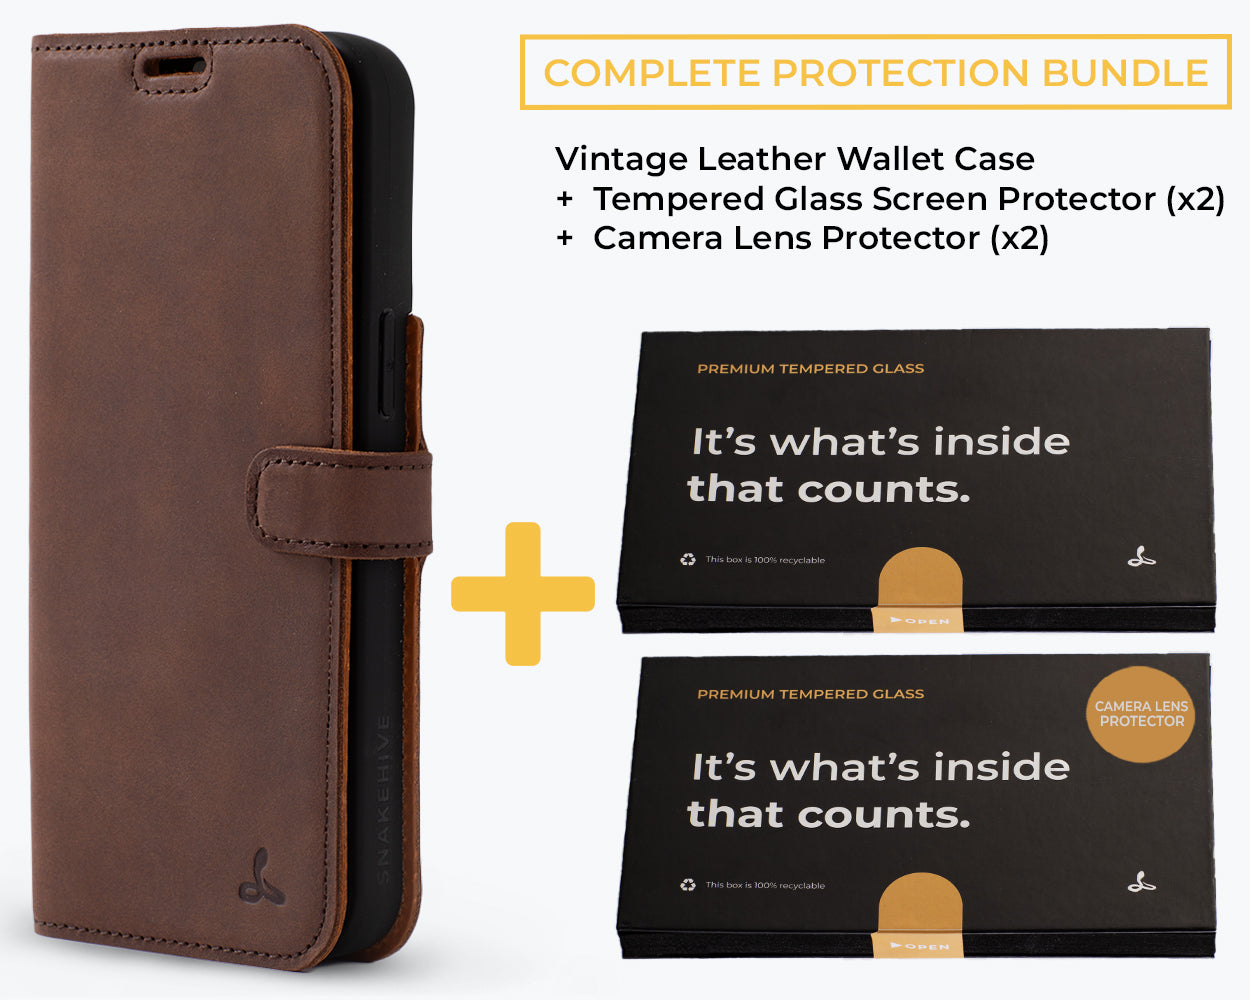 Complete Protection Bundle (Vintage Wallet) - Apple iPhone 11 Pro Max